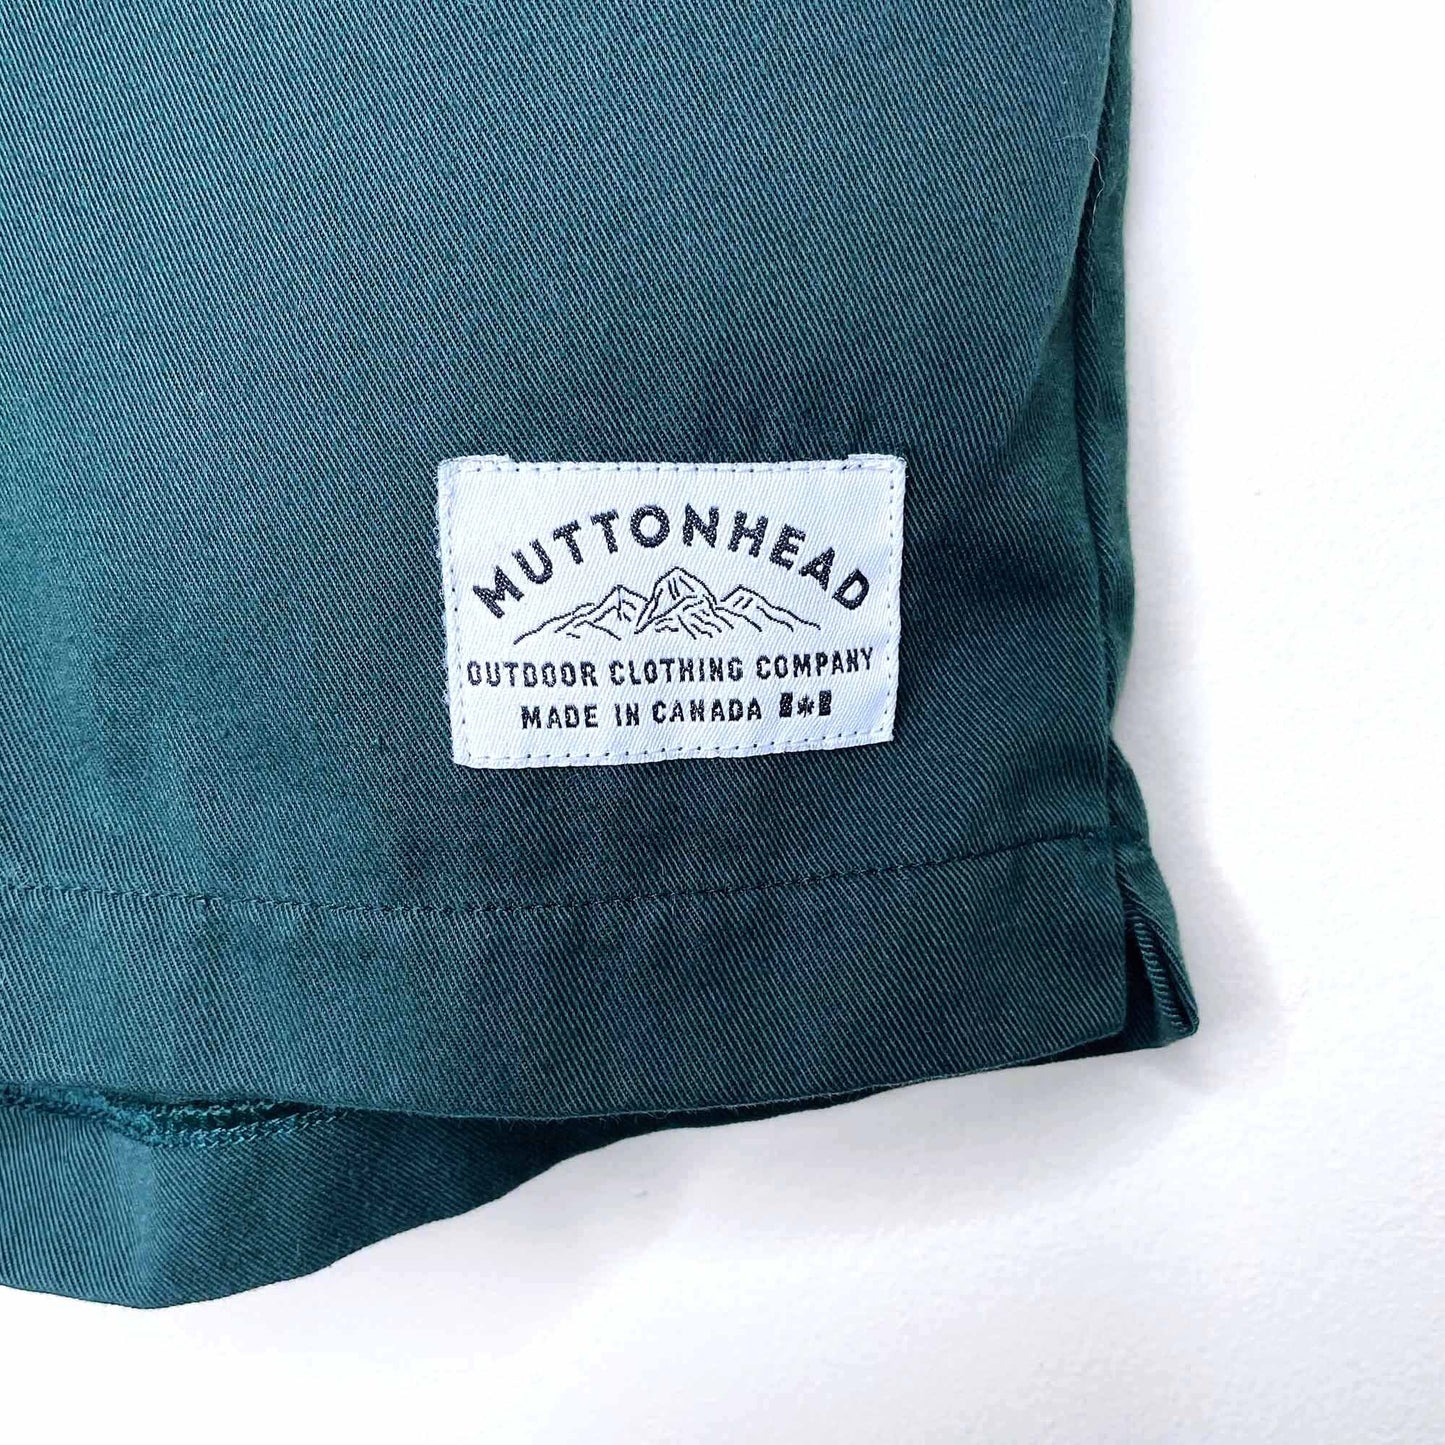 Muttonhead roamer shorts - size xs